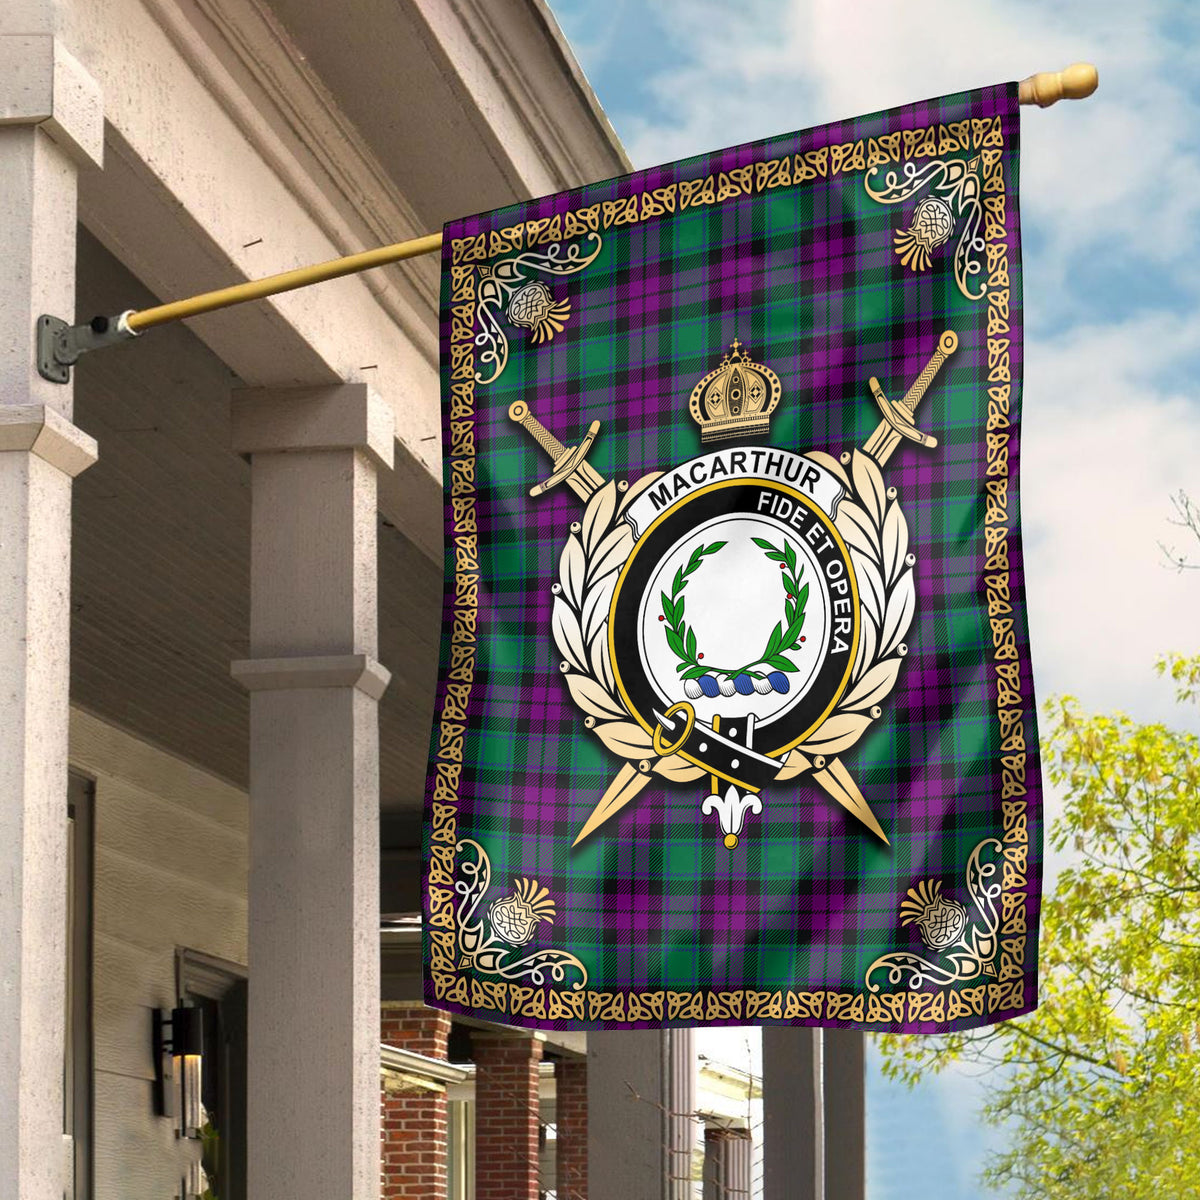 MacArthur – Milton Tartan Crest Garden Flag - Celtic Thistle Style